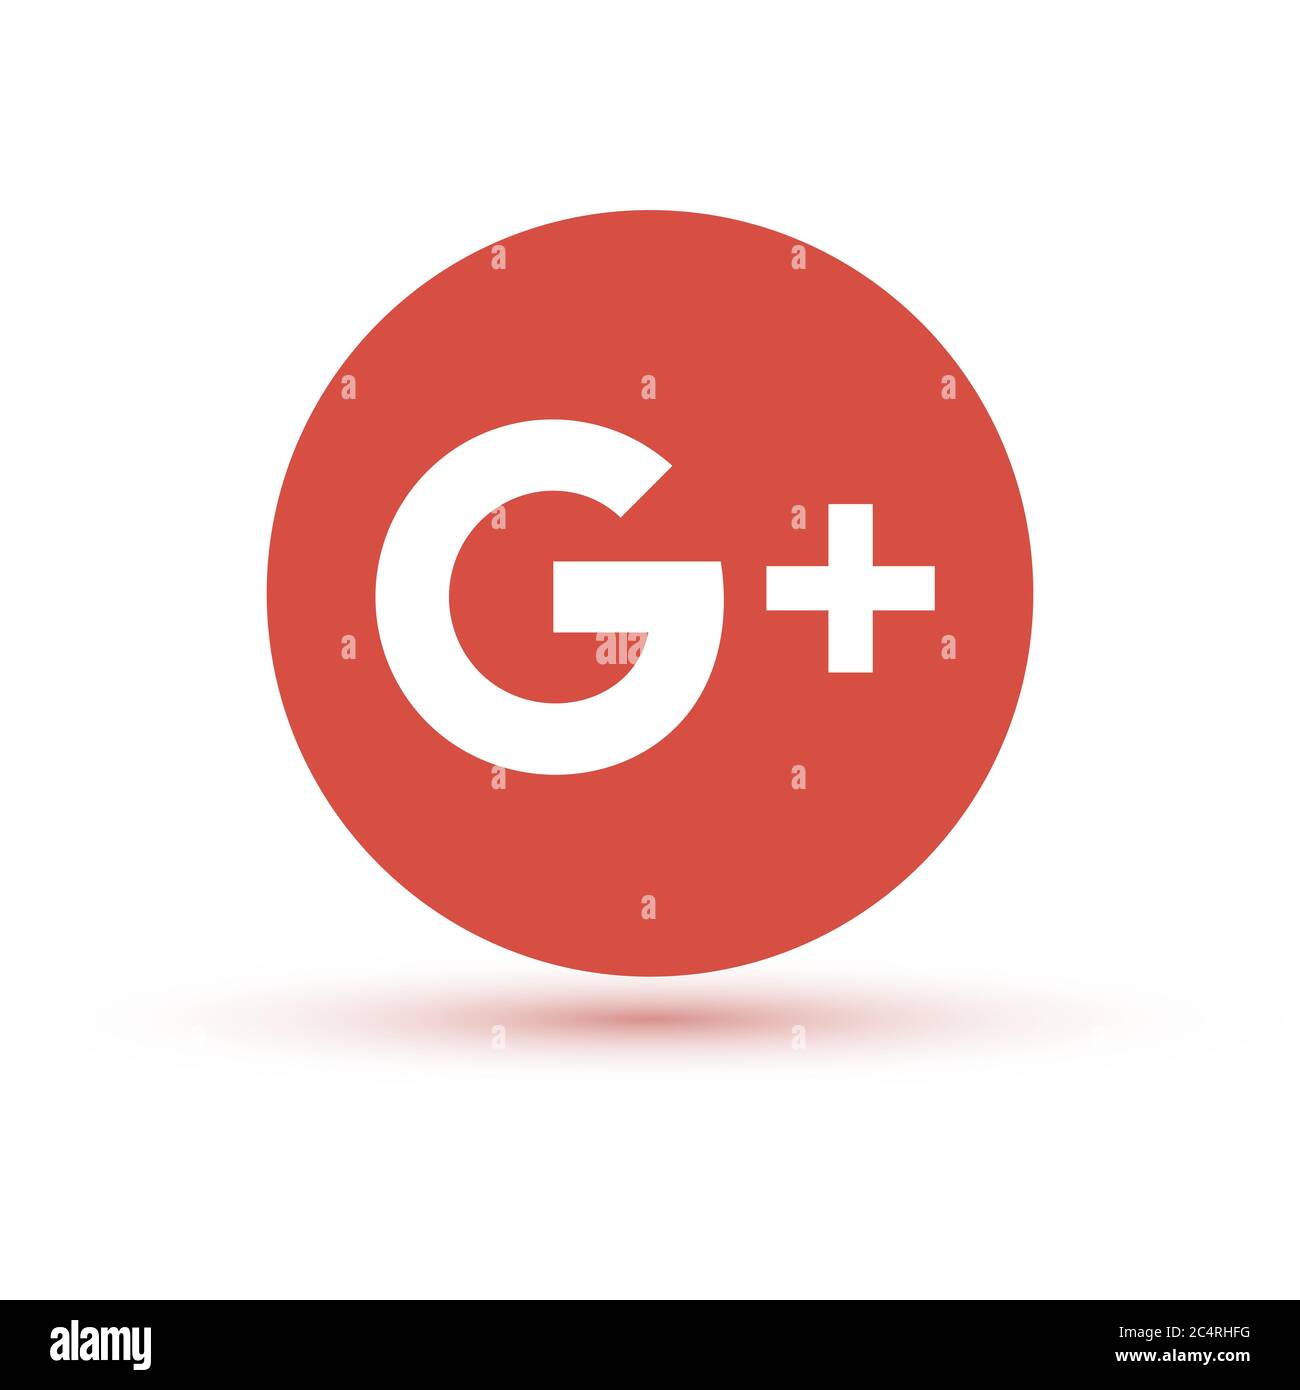 VORONEZH, RUSSIA - JANUARY 31, 2020: Google Plus logo orange round icon with shadow Stock Vector